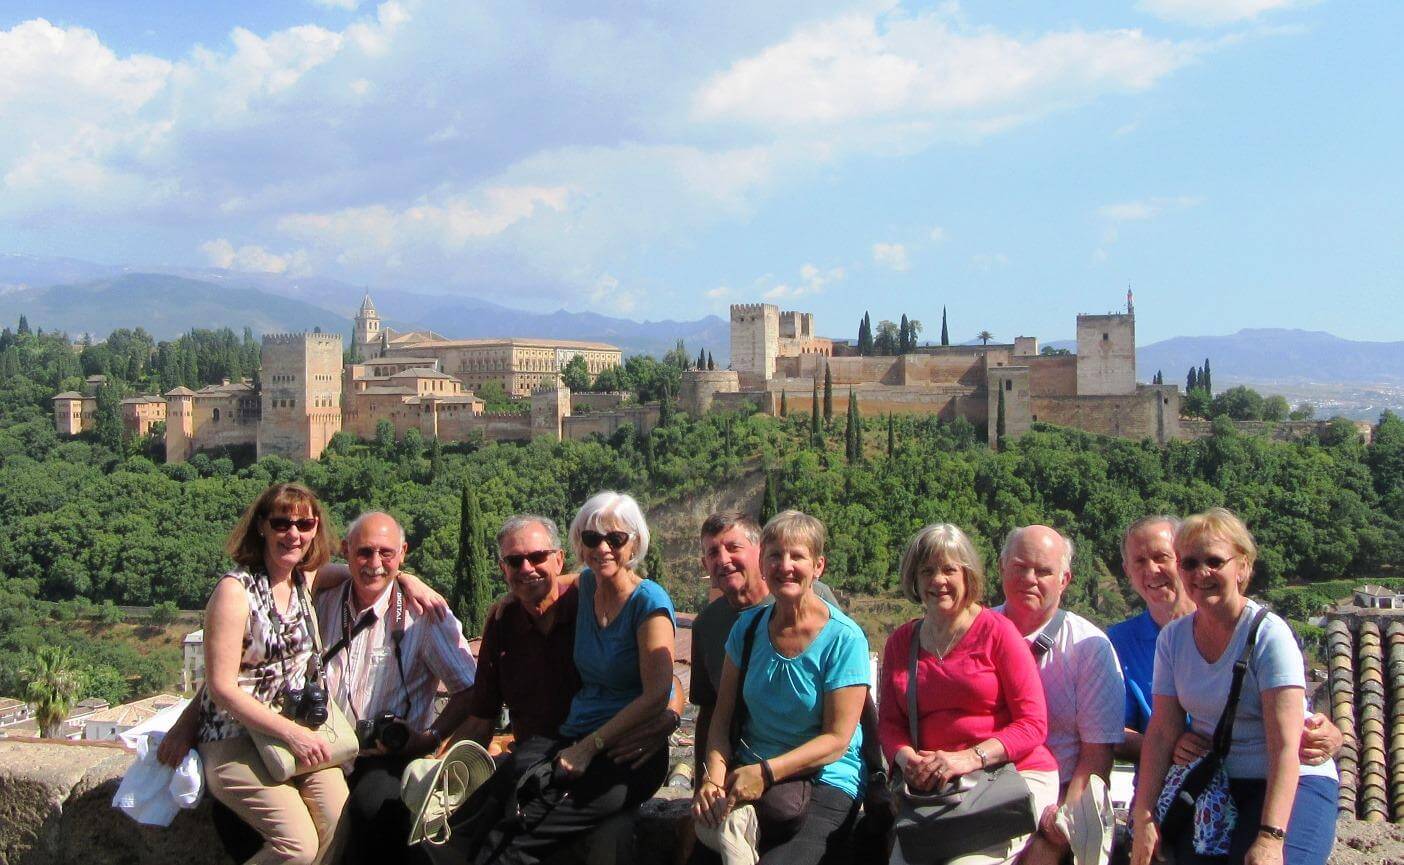 visiting the alhambra in granada